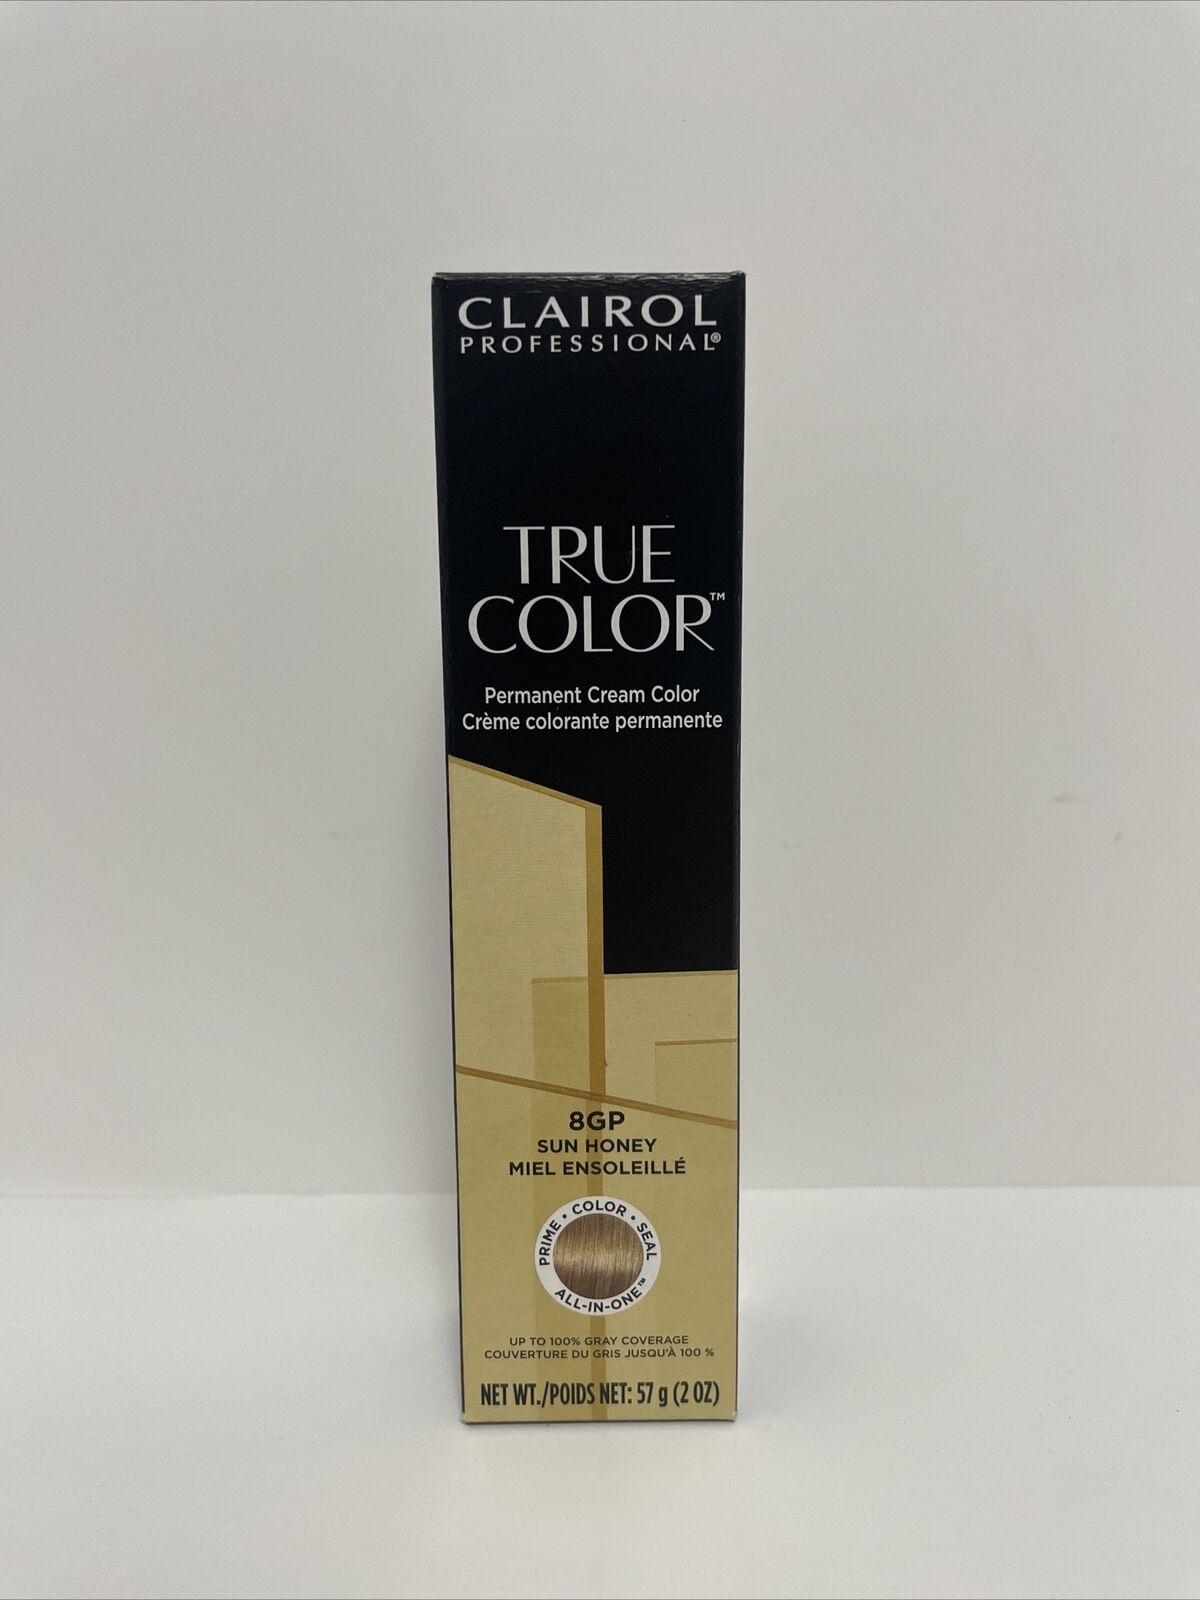 Clairol True Color Permanent Cream Color 2 oz 8GP  Sun Honey